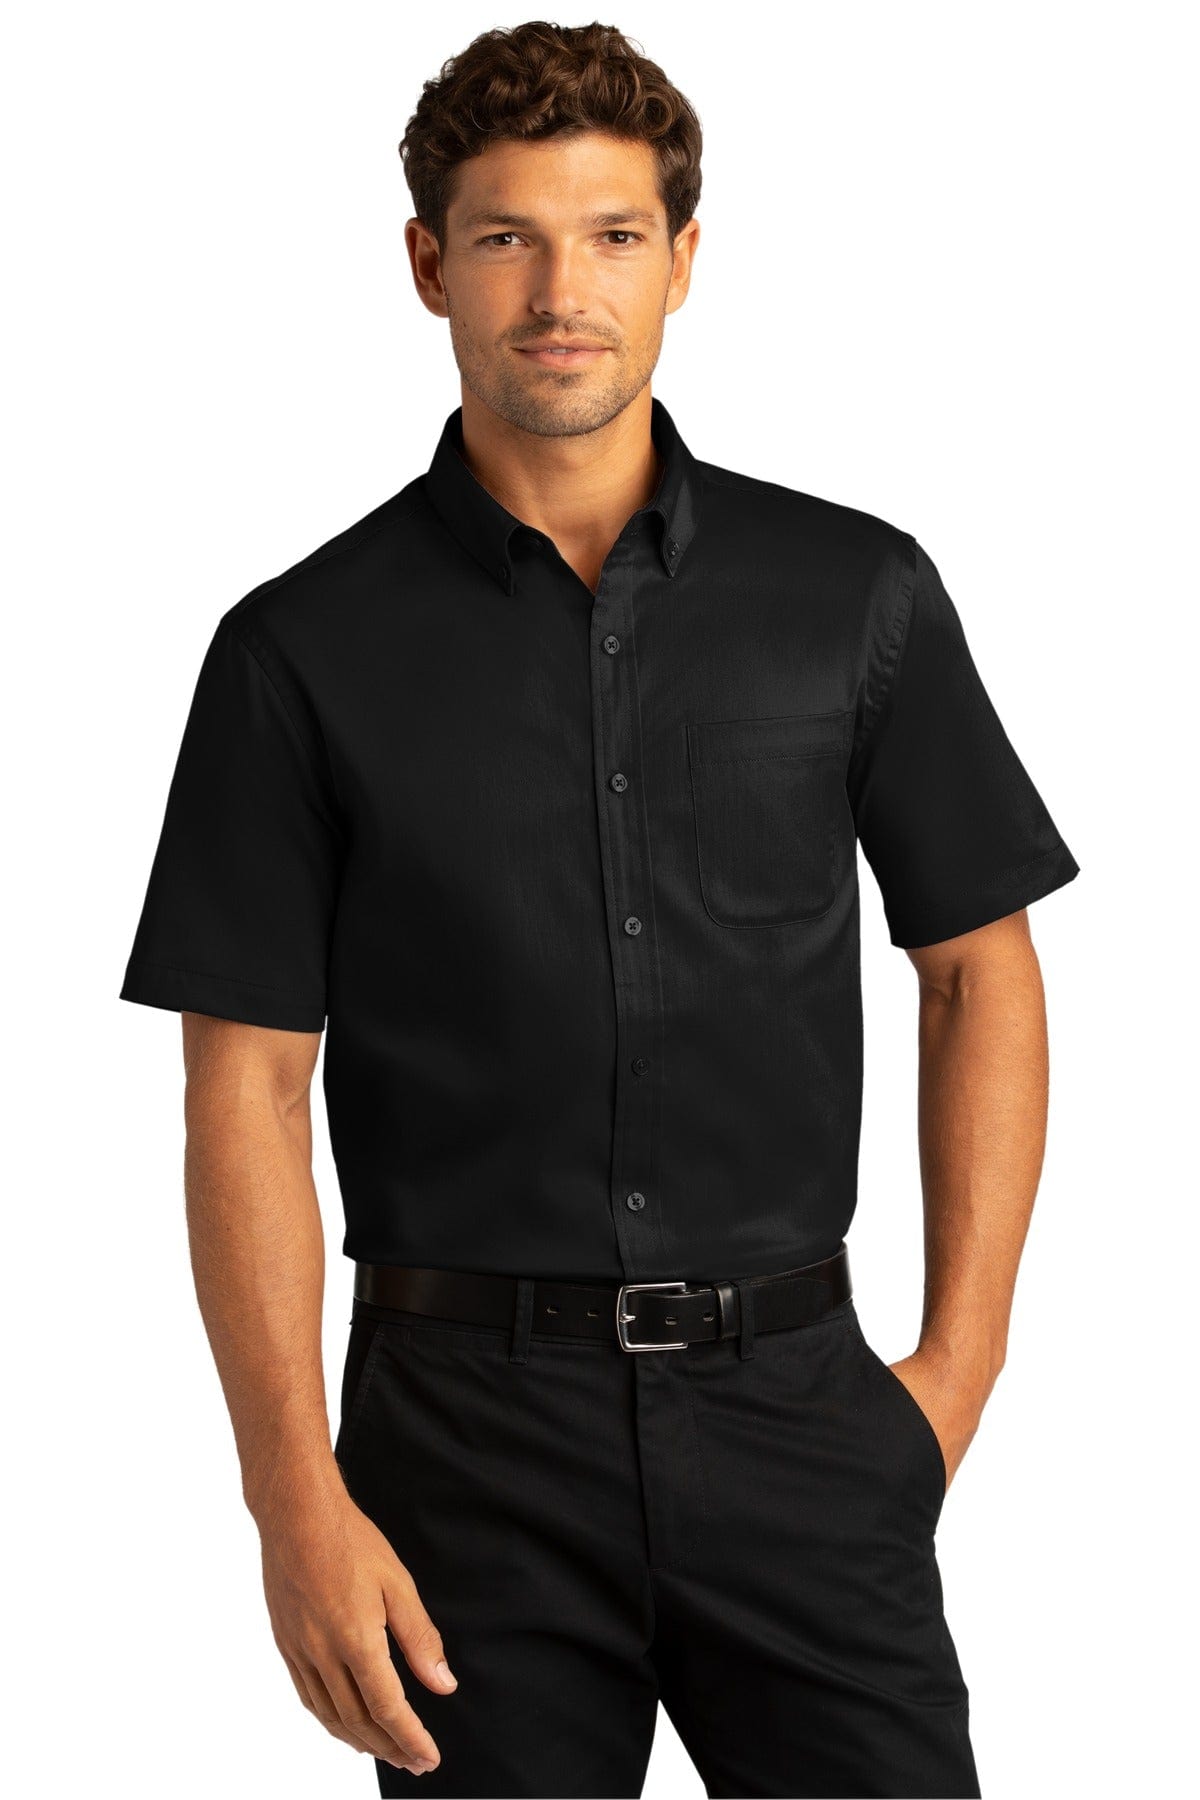 Port Authority ® Short Sleeve SuperPro React ™ Twill Shirt. W809, Basic Colors